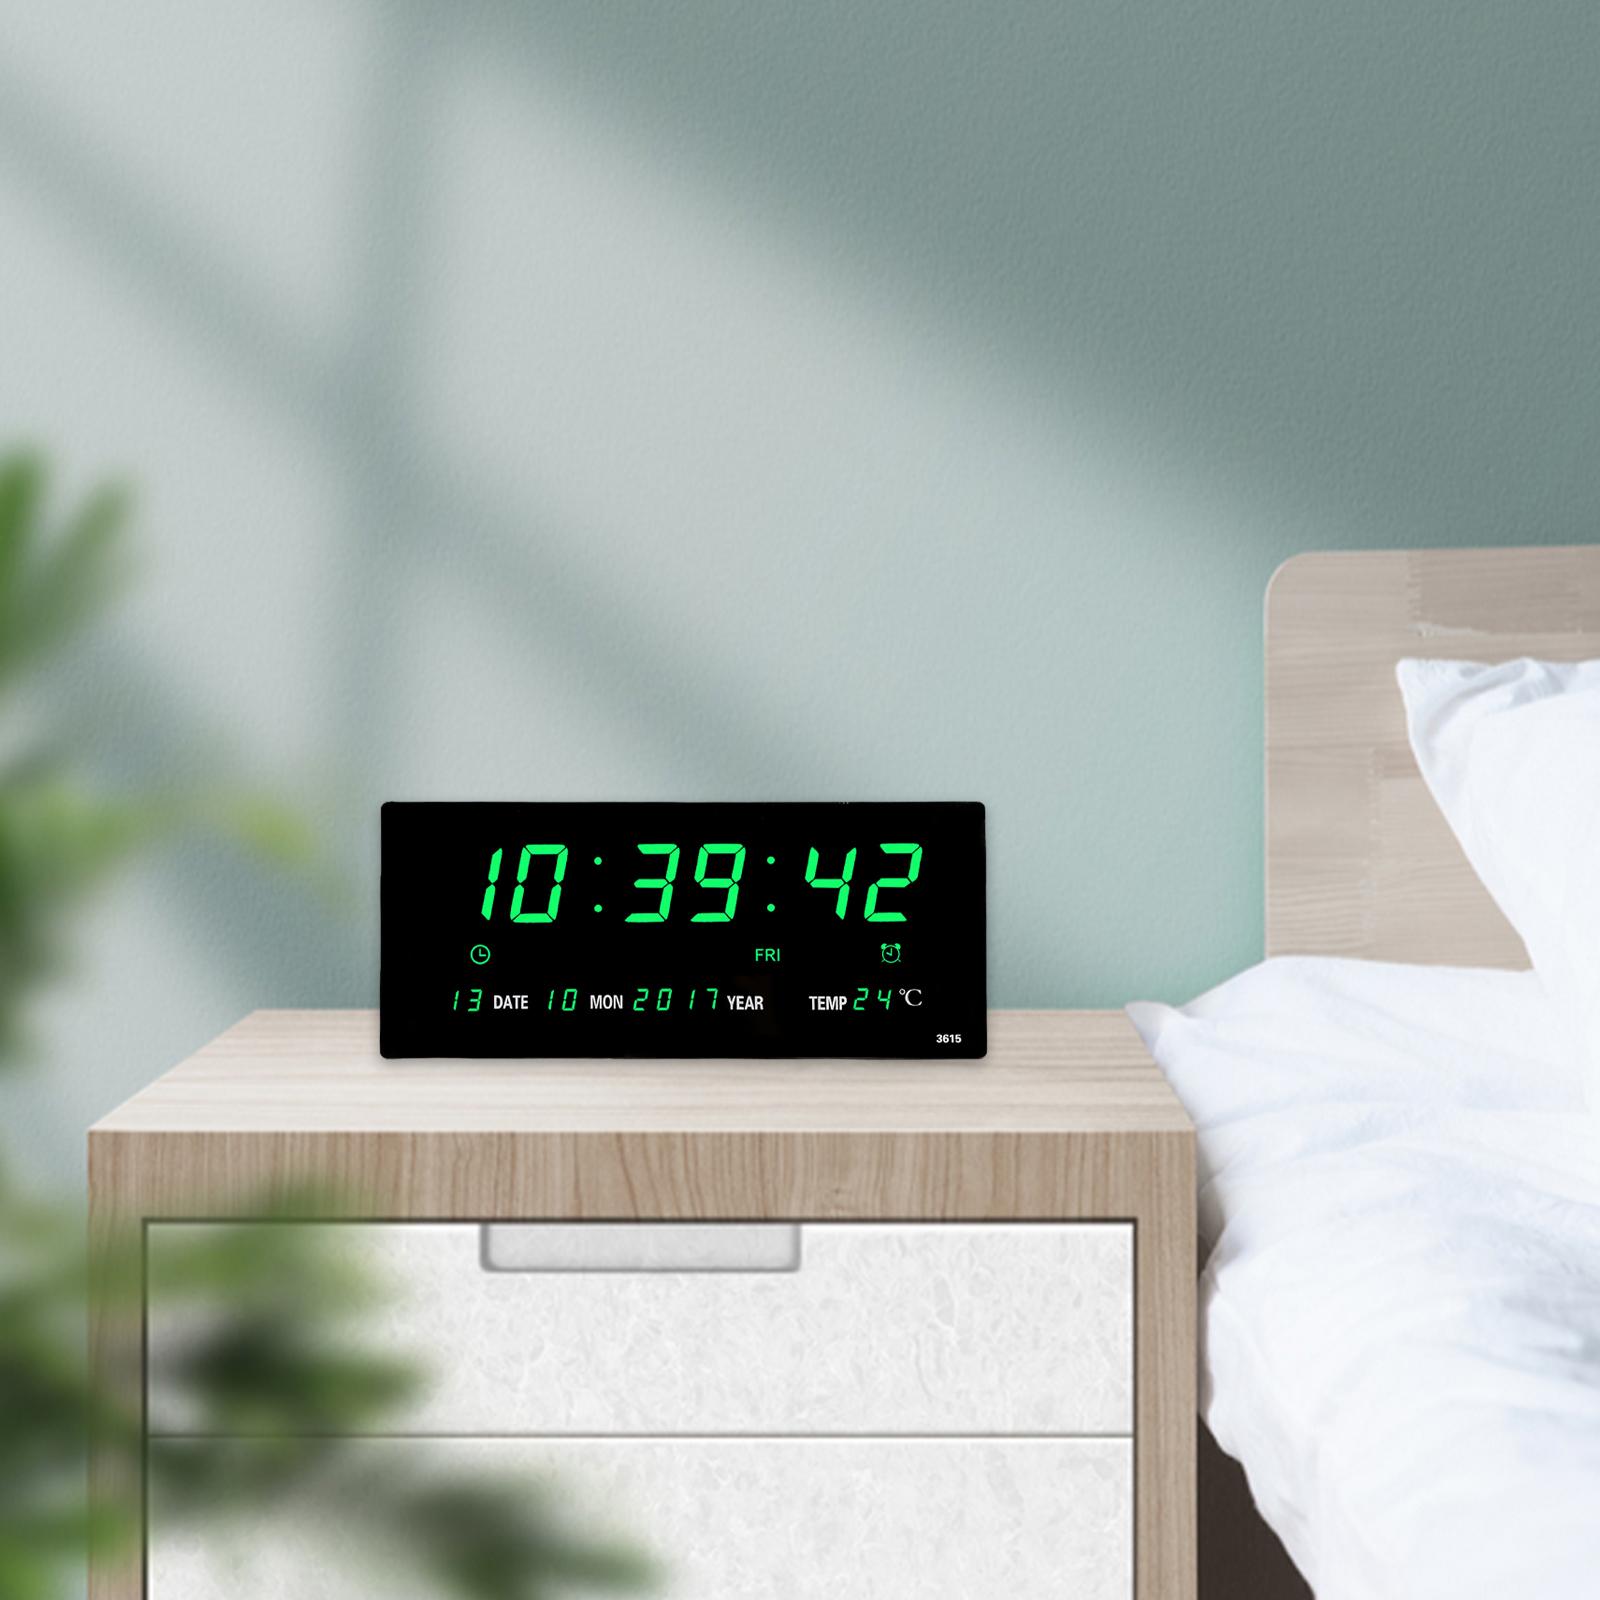 Electric Wall Clock Decor Calendar Display for Bedroom Living Room Green